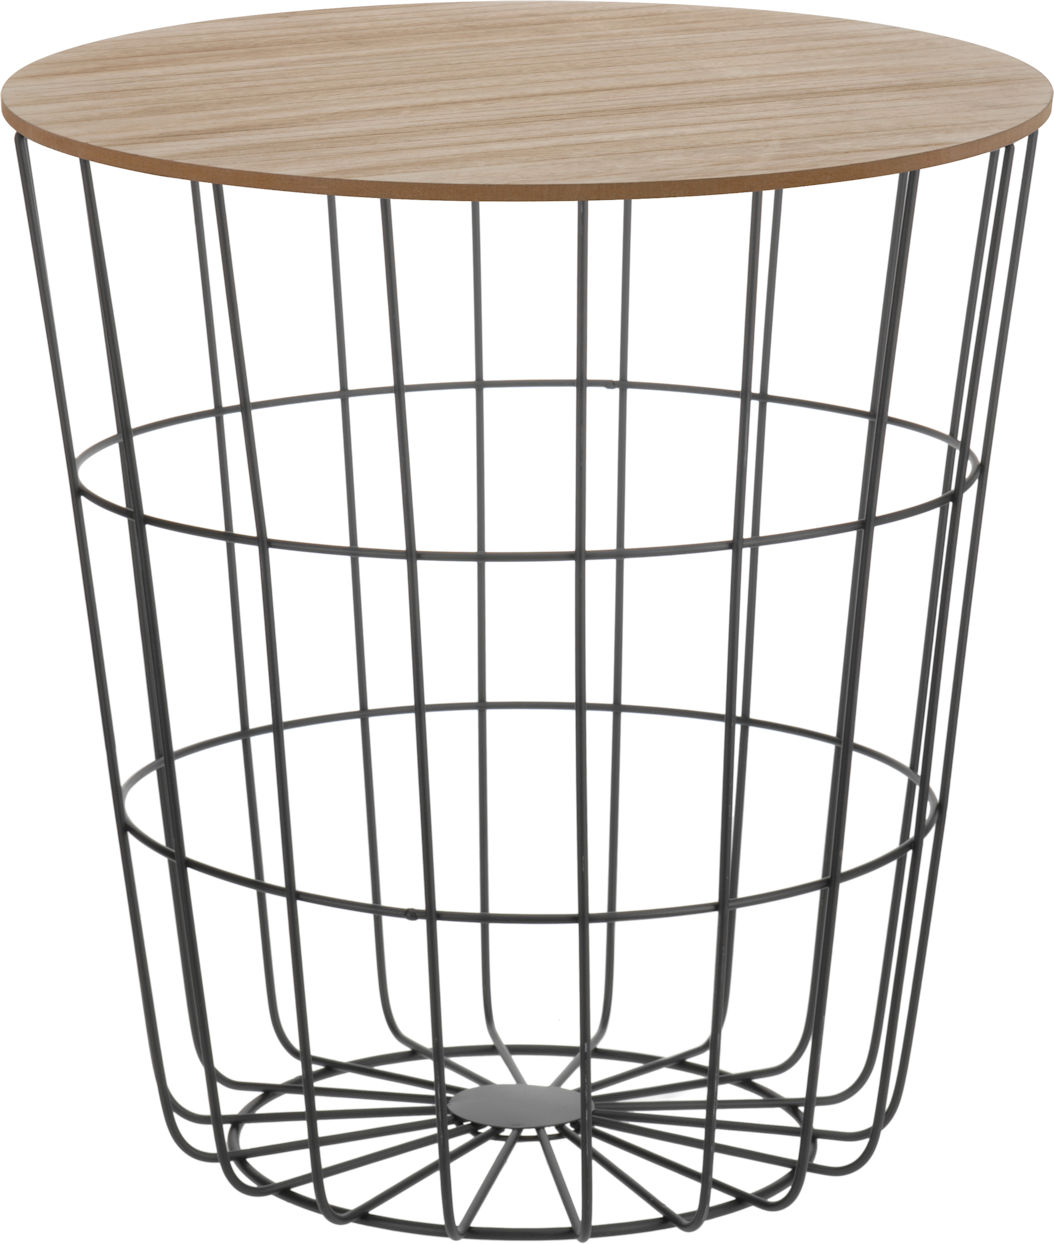 Design Beistelltisch - Metall Korb + Holz Deckel - Tisch ...